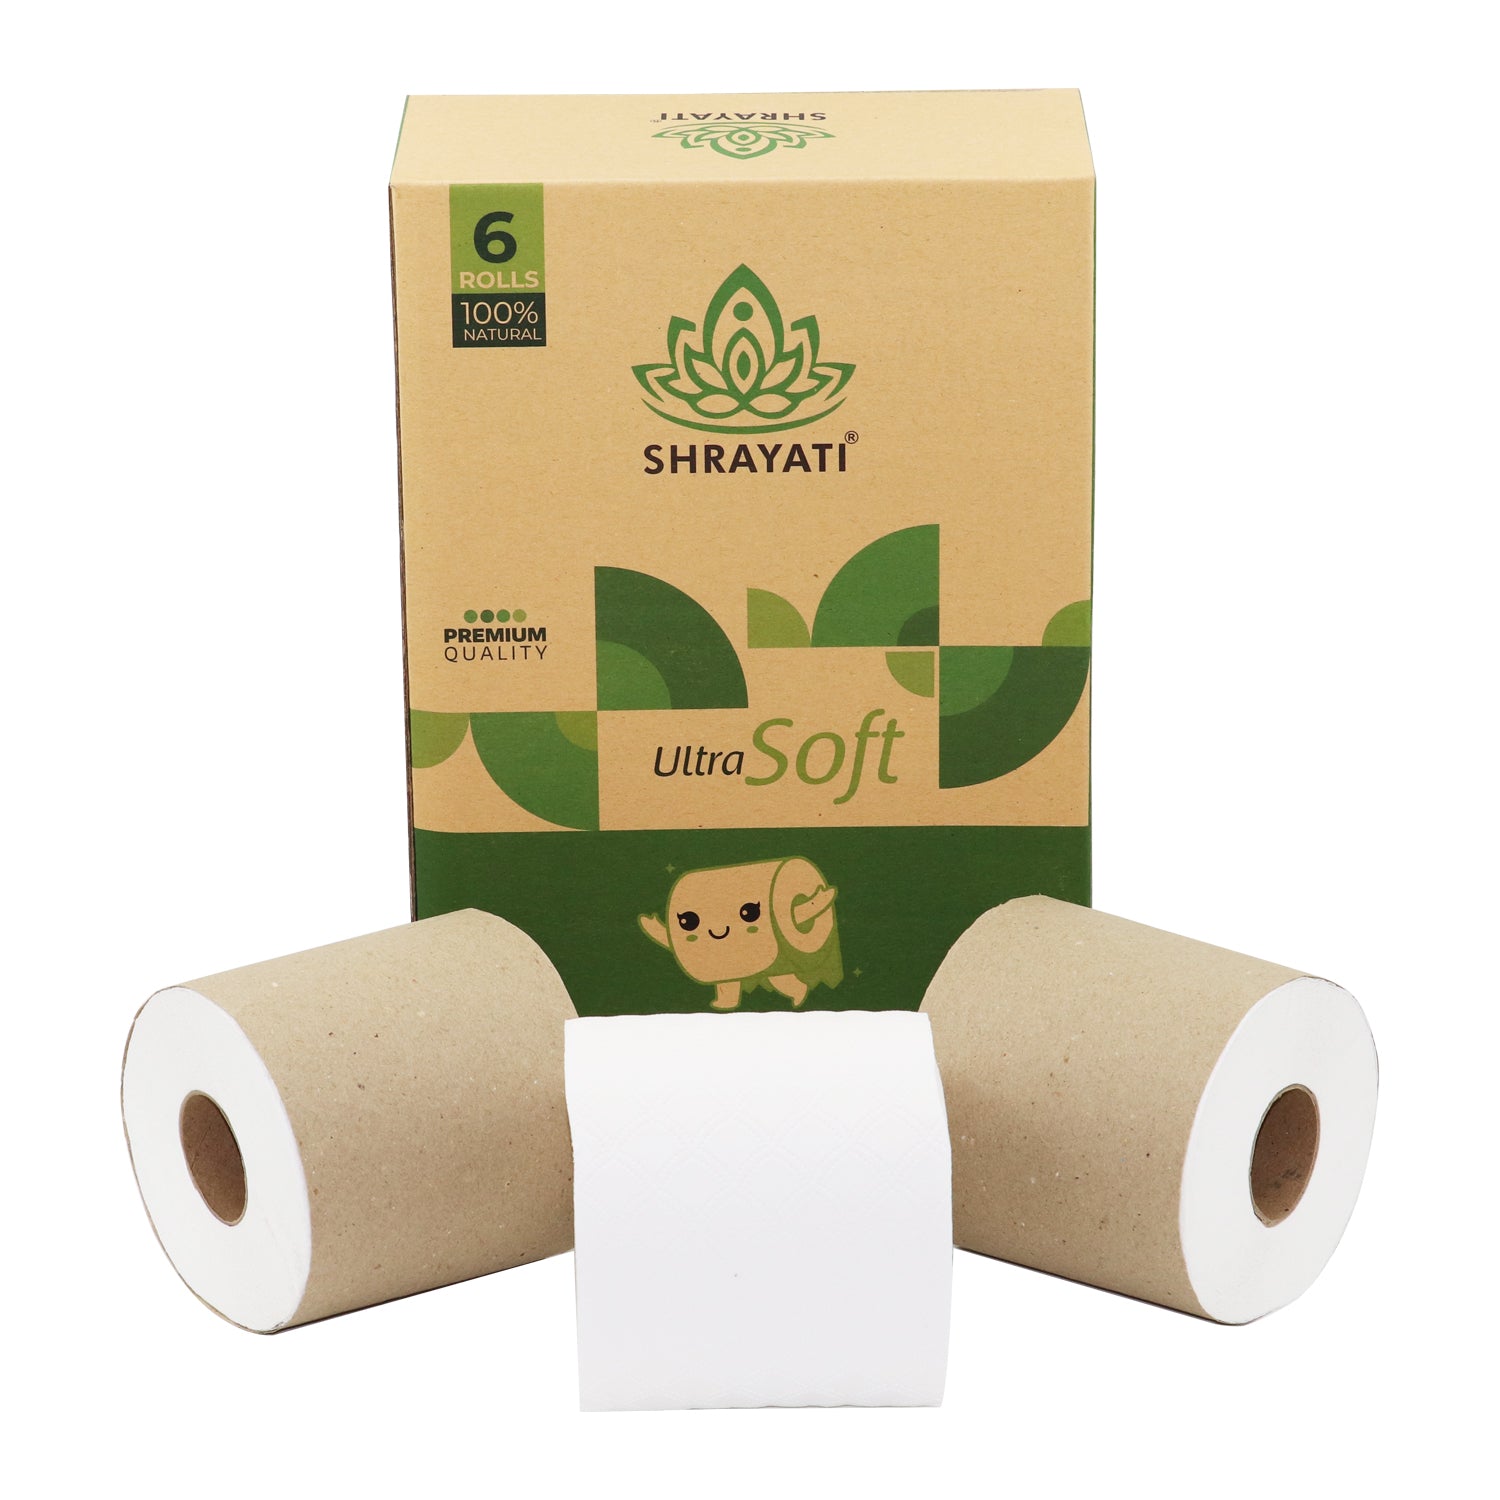 Shrayati Toilet Paper Roll, 10 x 10 cm, Pack of 6 Pcs. - Shrayati